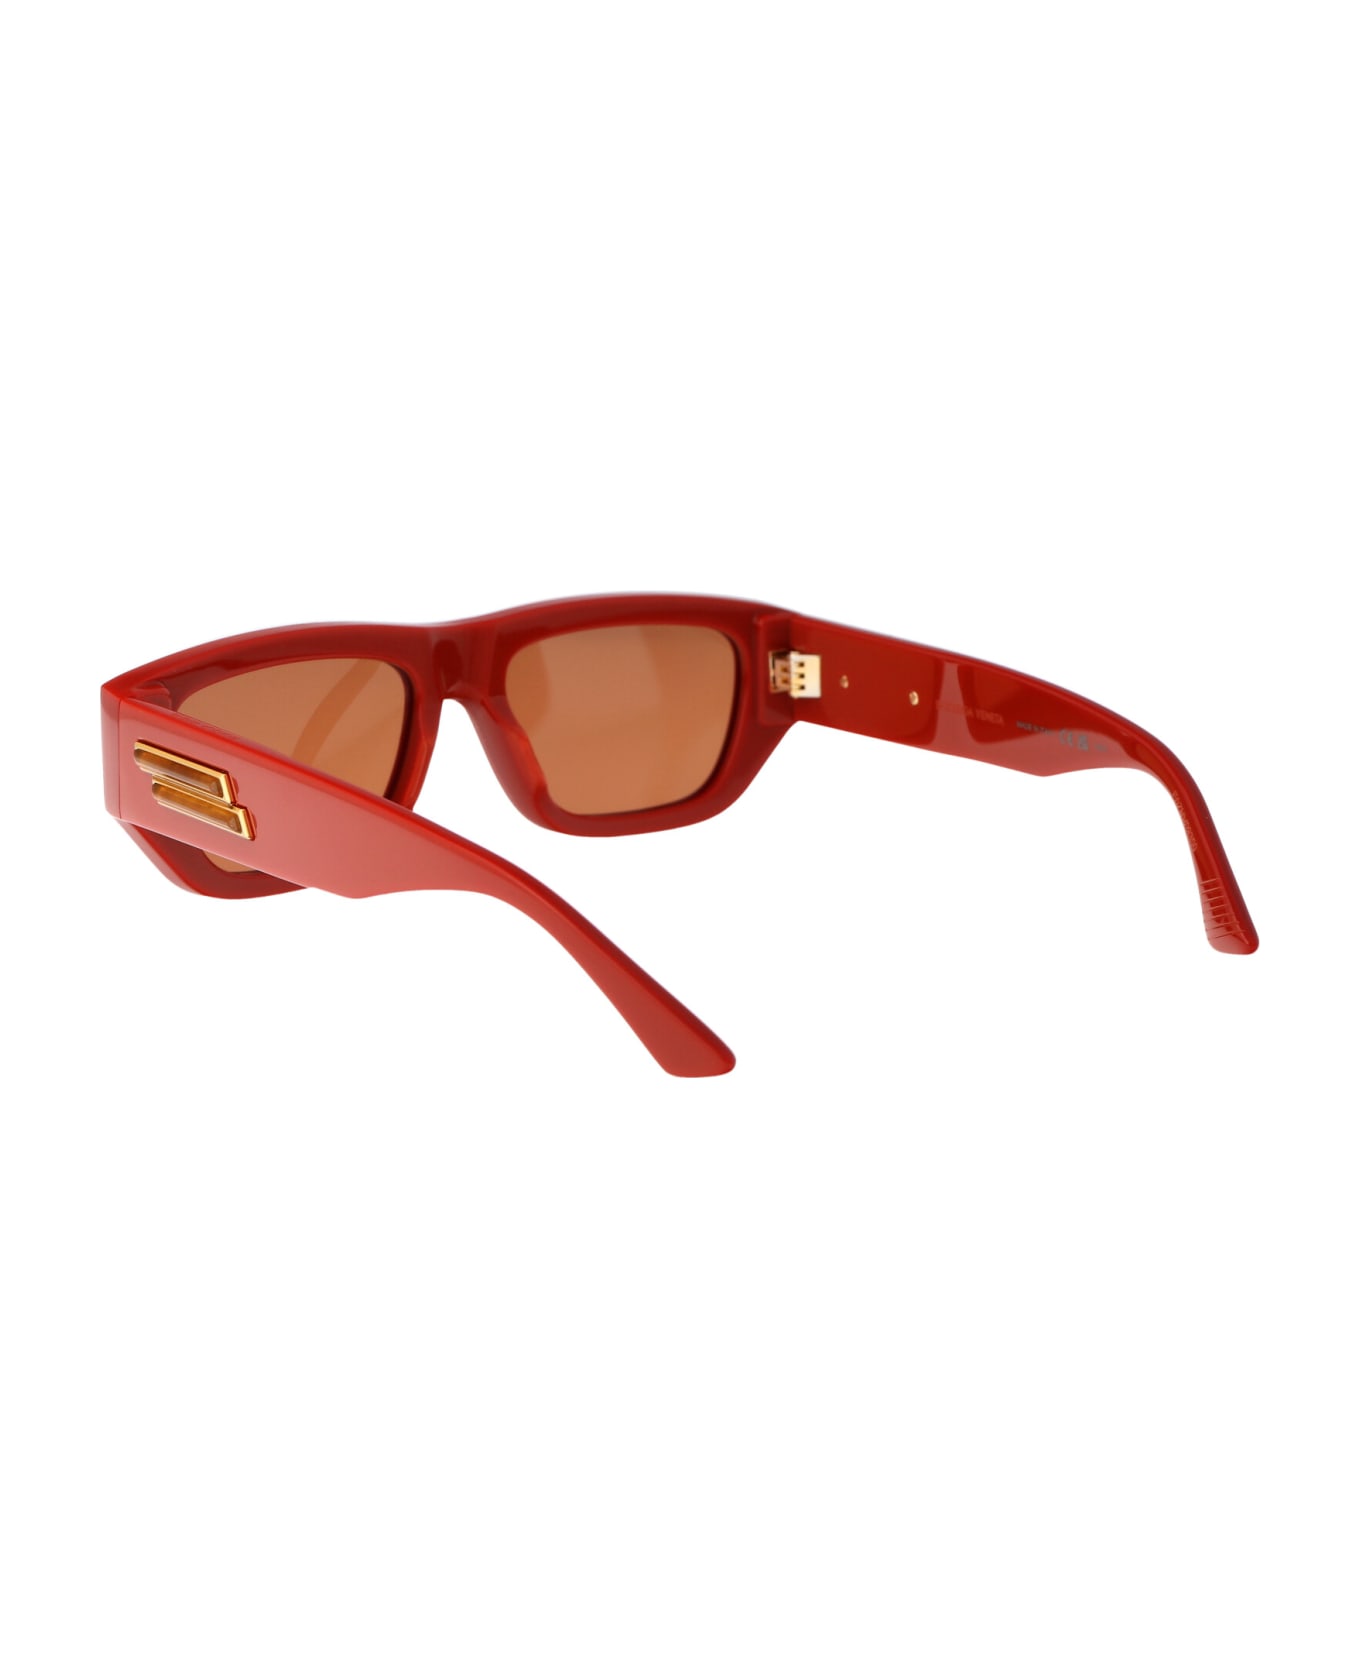 Bottega Veneta Eyewear Bv1252s Sunglasses - 004 ORANGE ORANGE BROWN